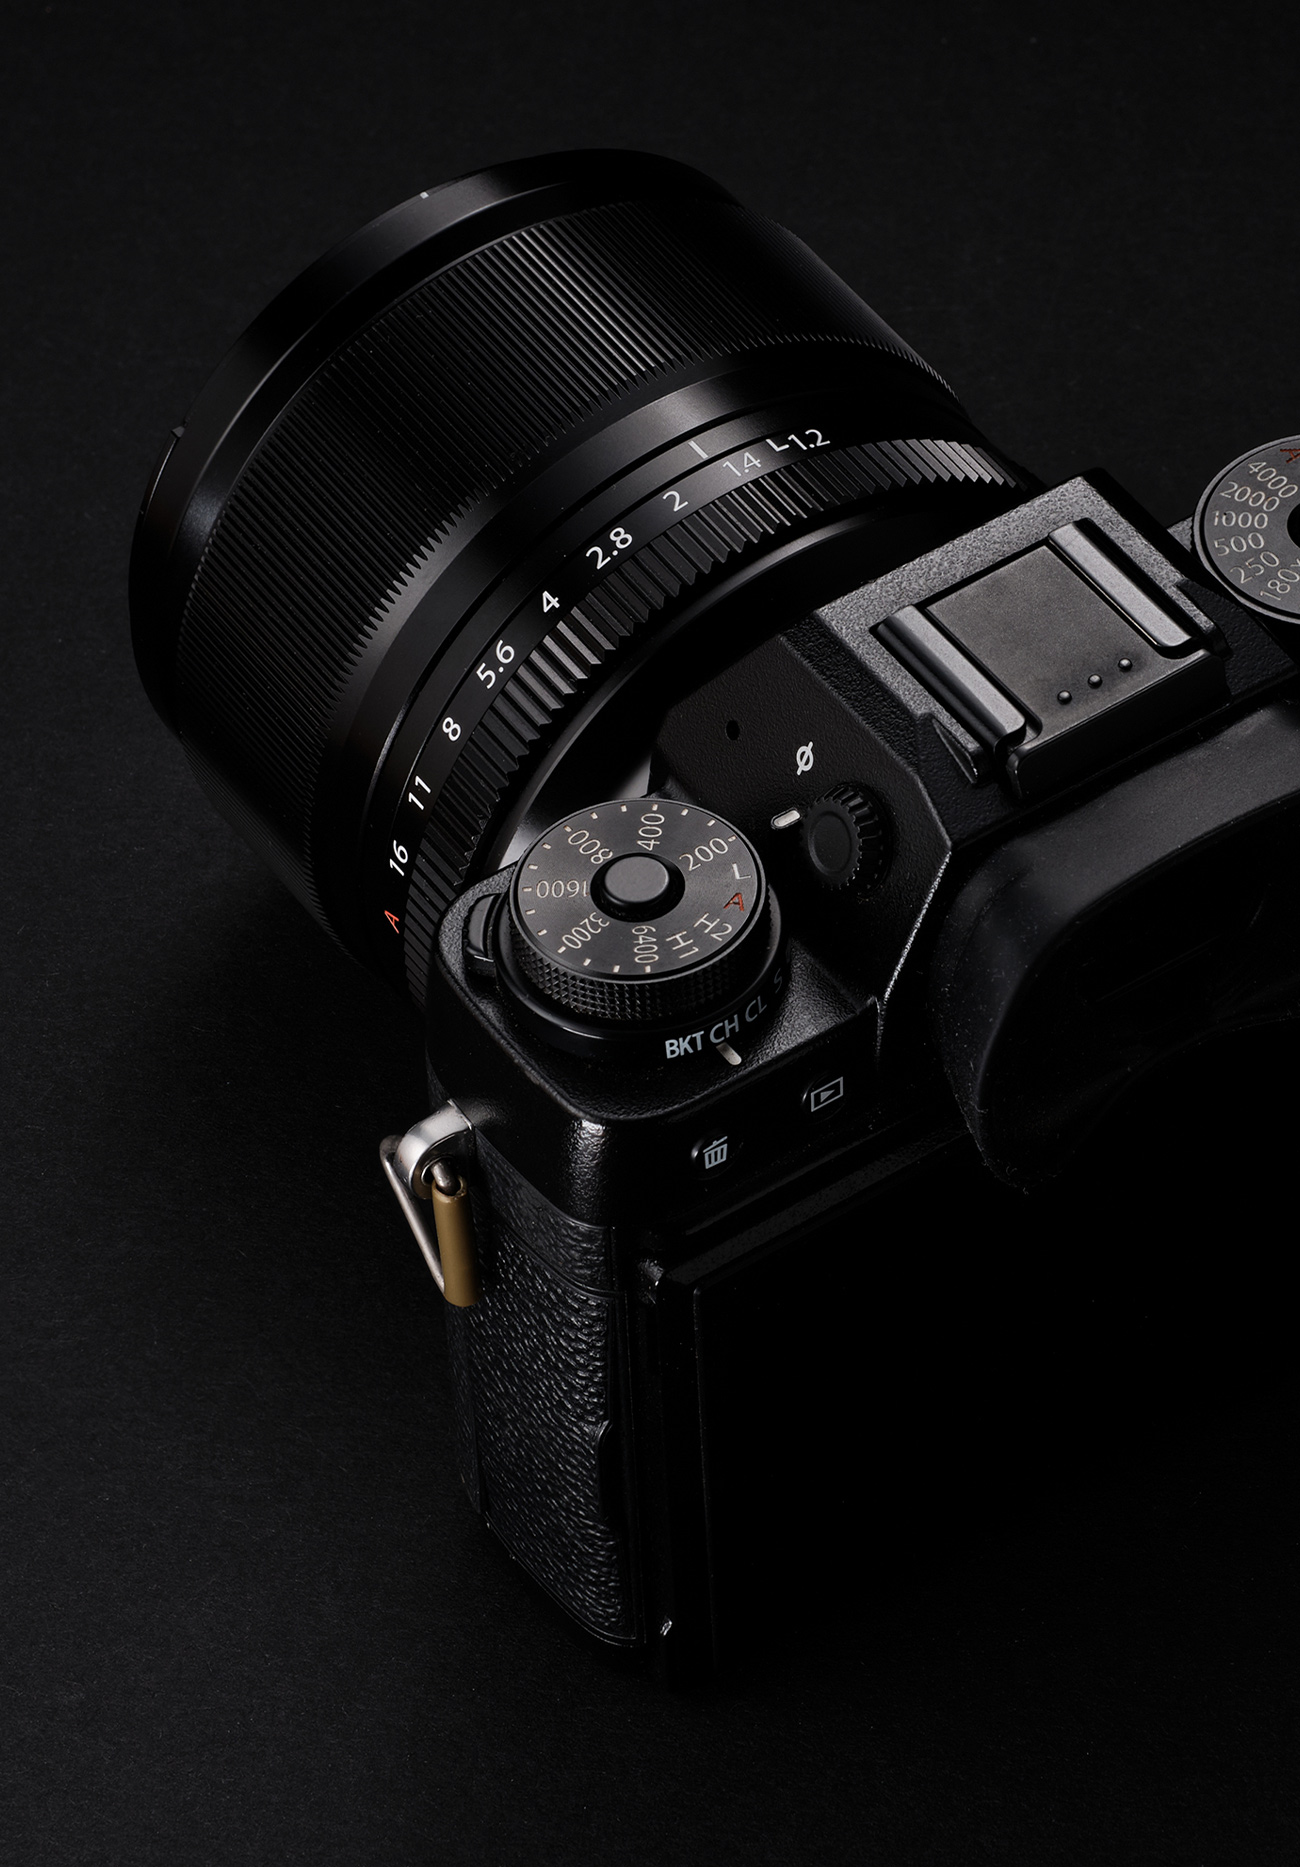 Fujifilm X-T1 camera with 56mm 1.2R lens